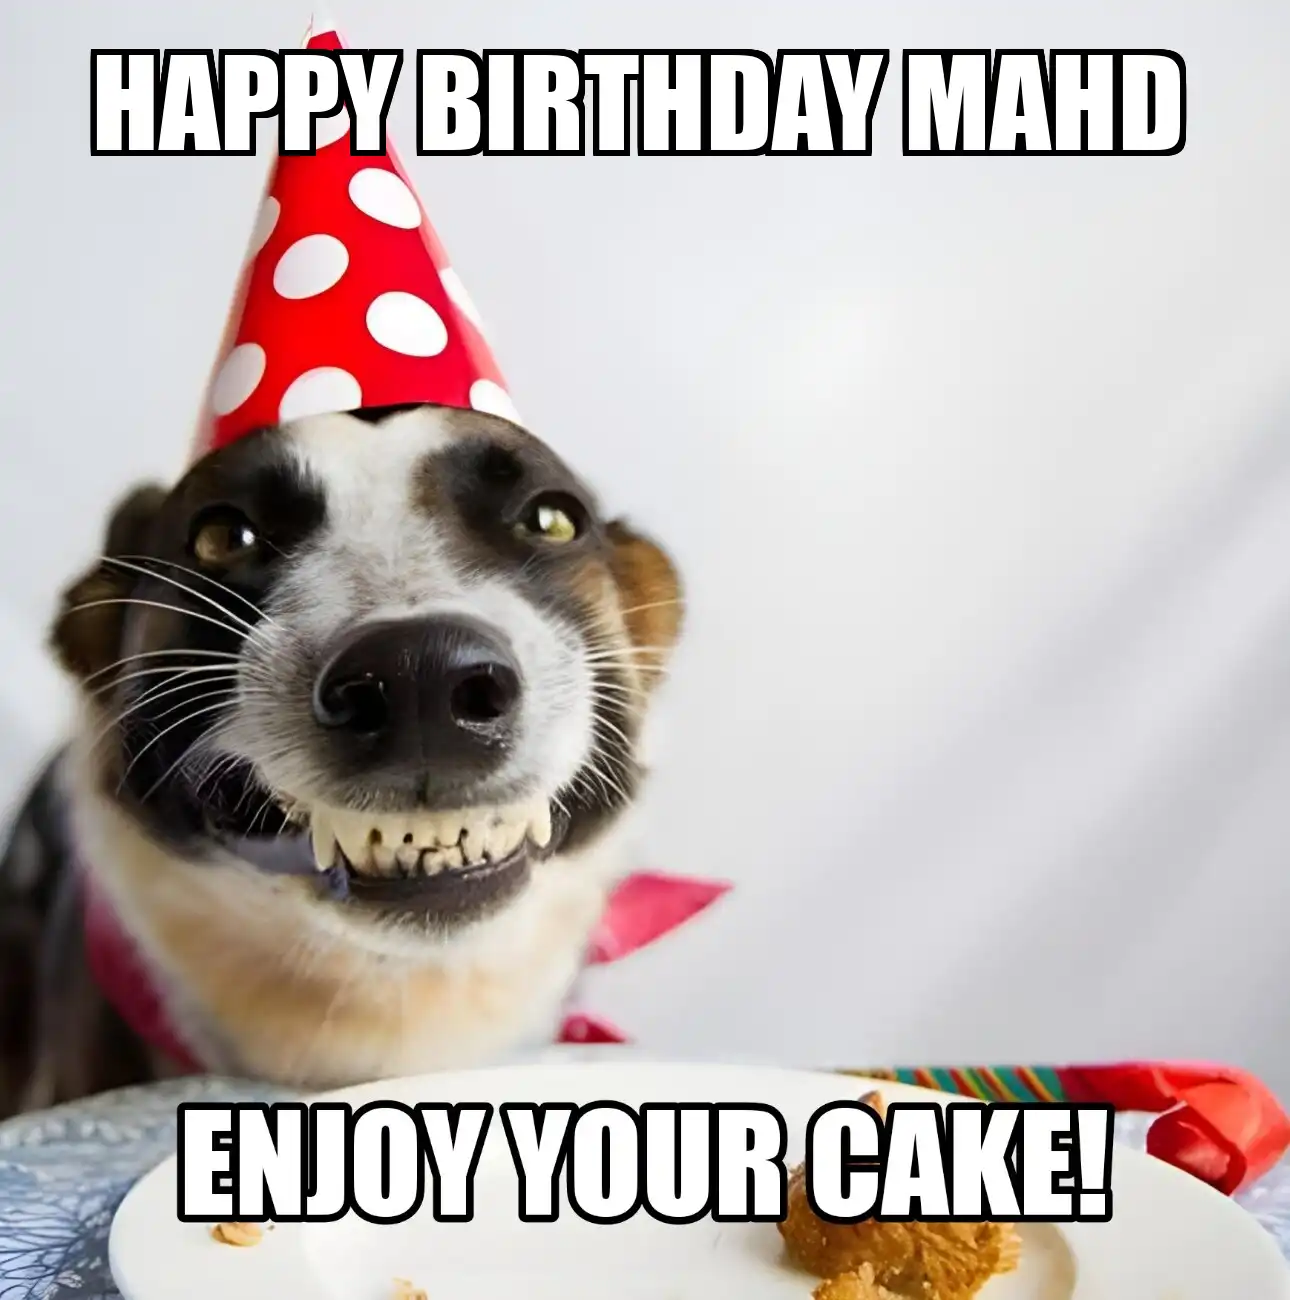 Happy Birthday Mahd Enjoy Your Cake Dog Meme